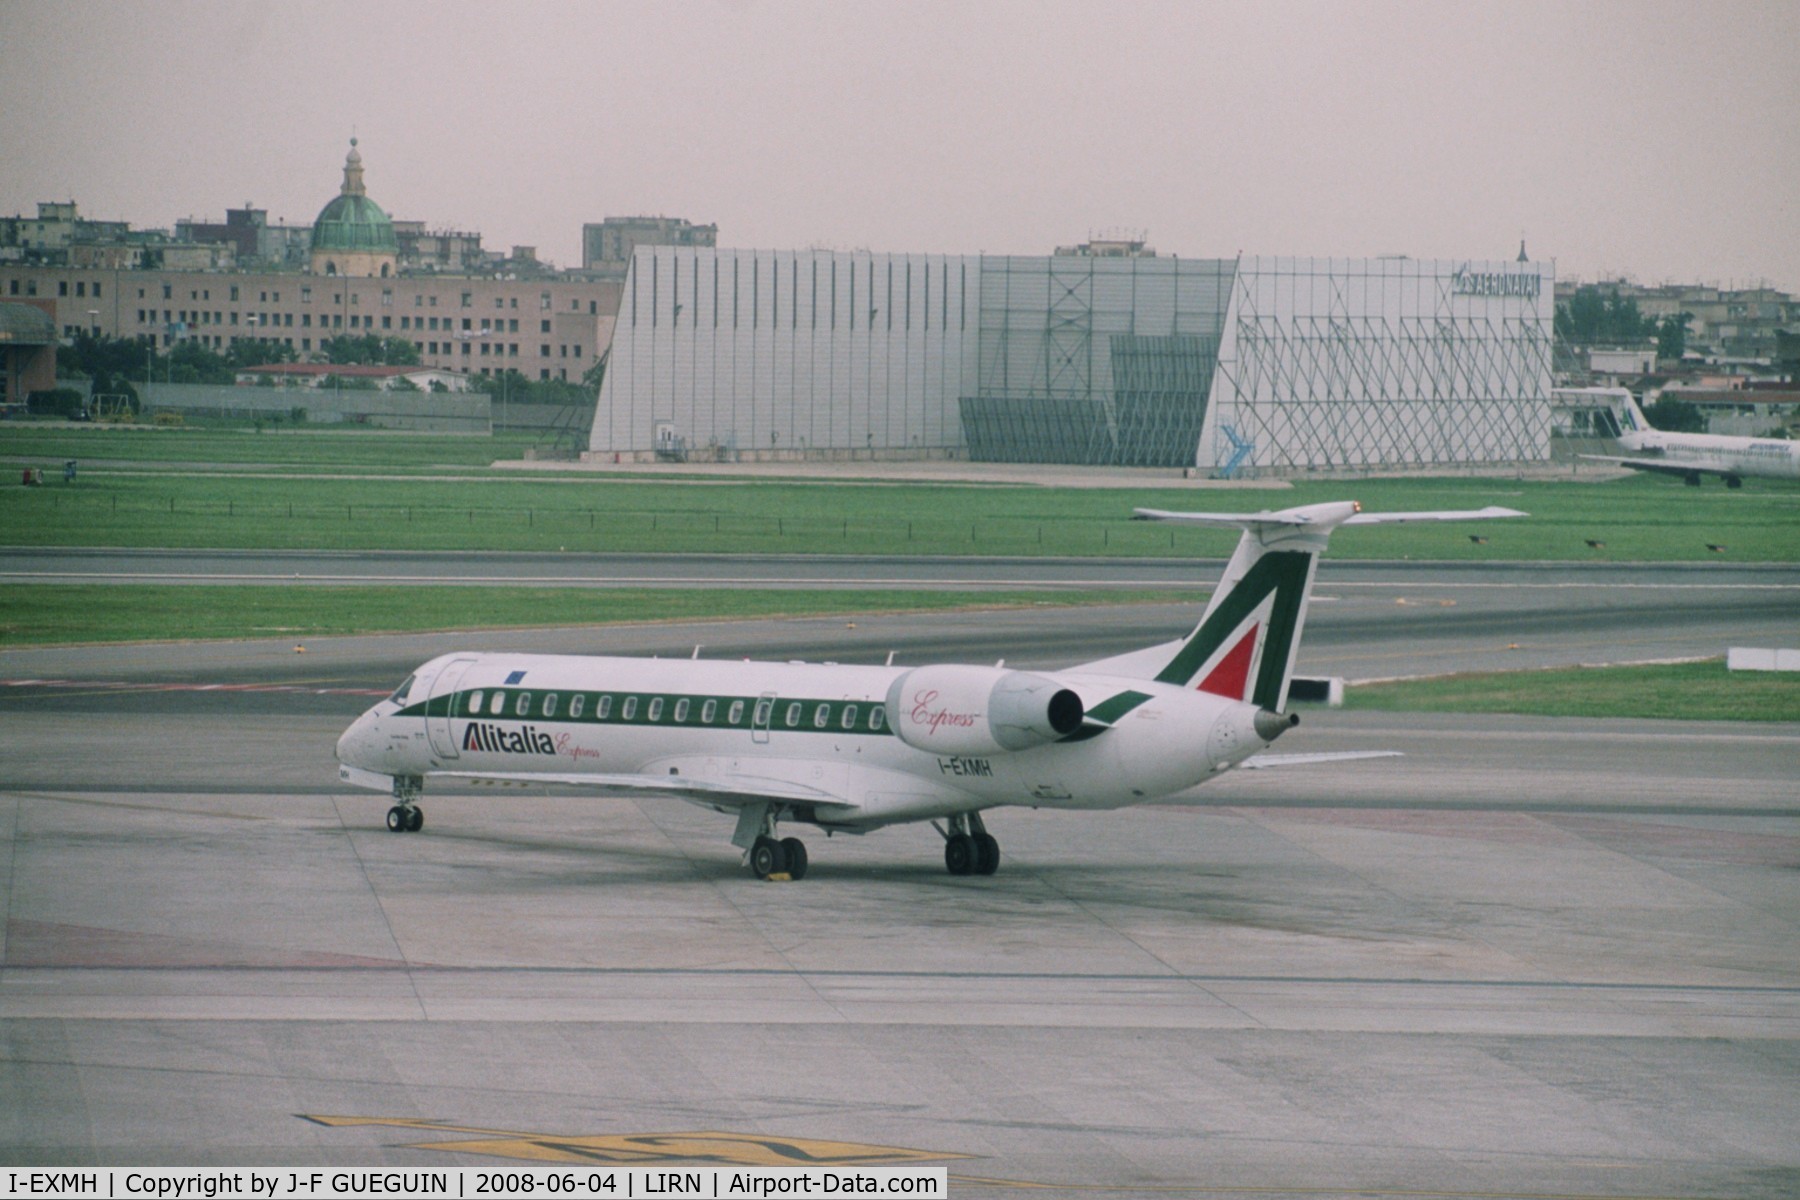 I-EXMH, 2002 Embraer ERJ-145LR (EMB-145LR) C/N 145665, I-EXMH waiting at Naples-Capodichino.